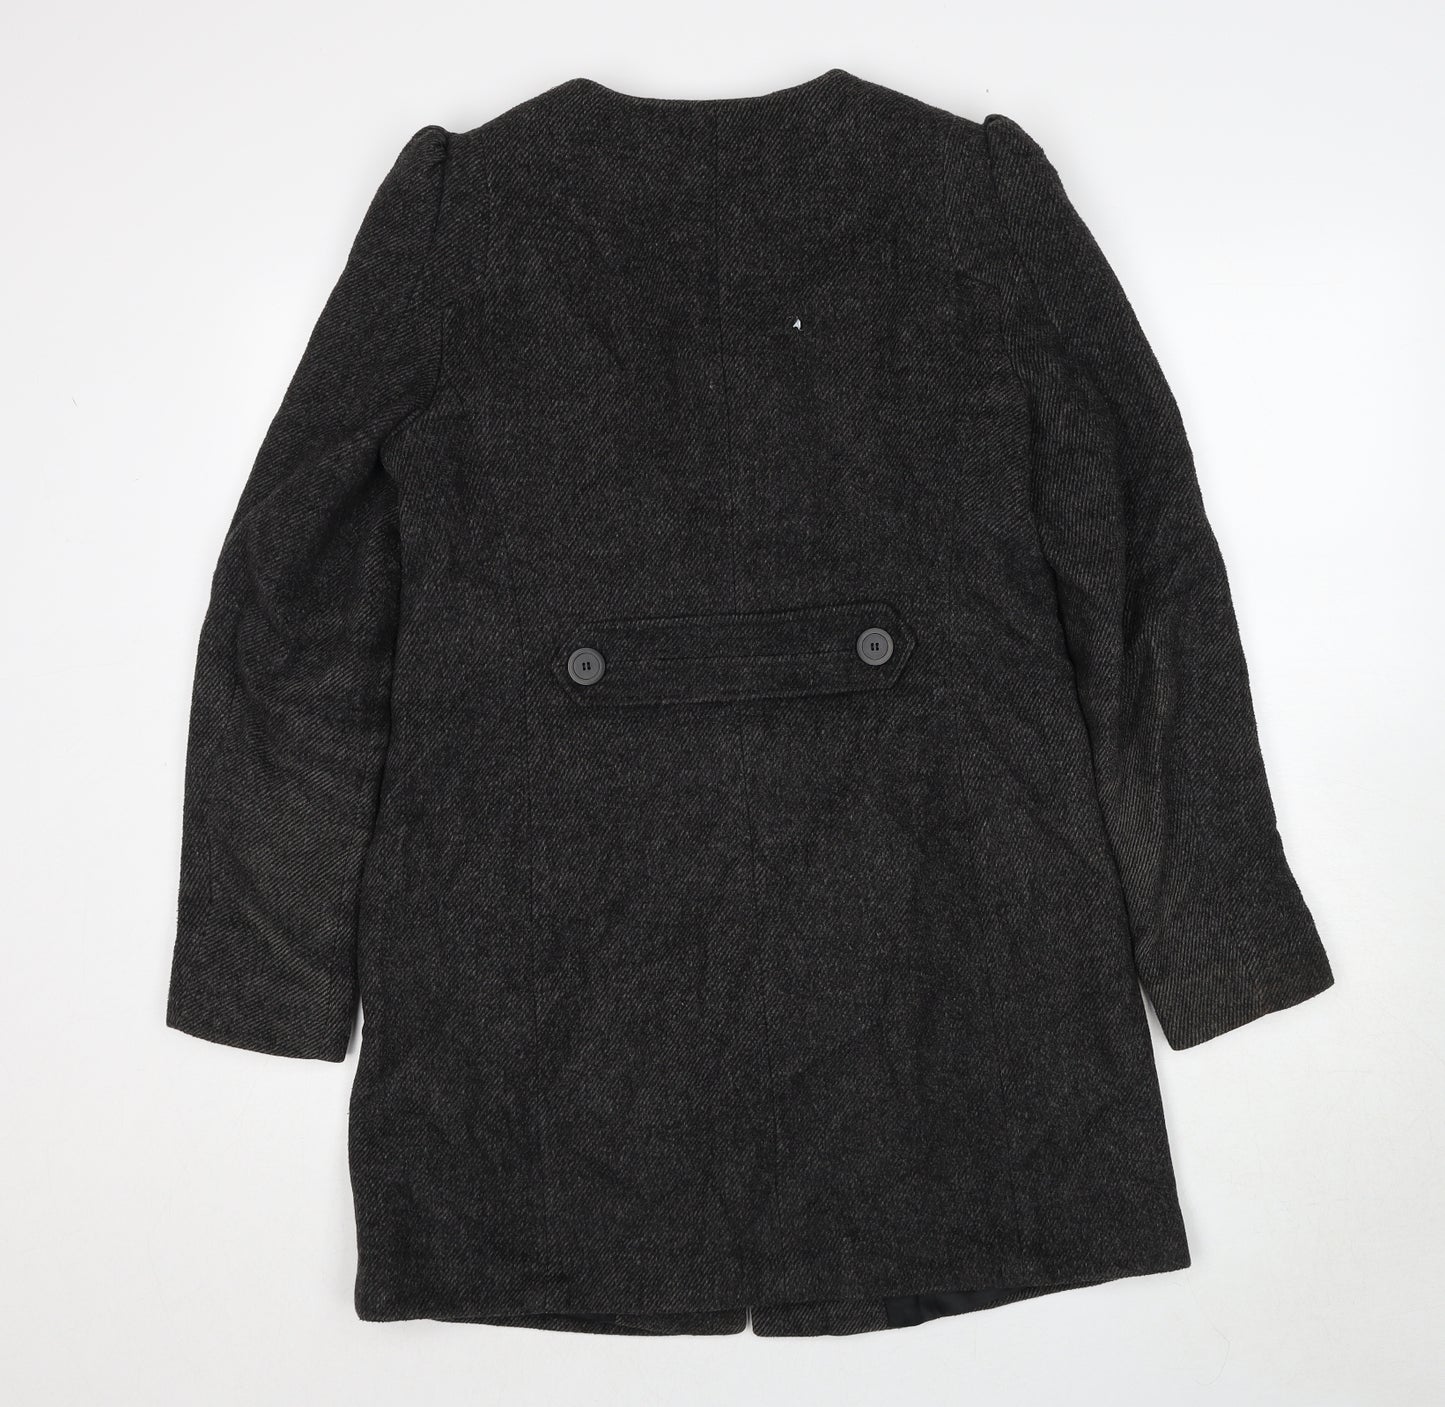 Esprit Womens Grey Overcoat Coat Size 12 Button